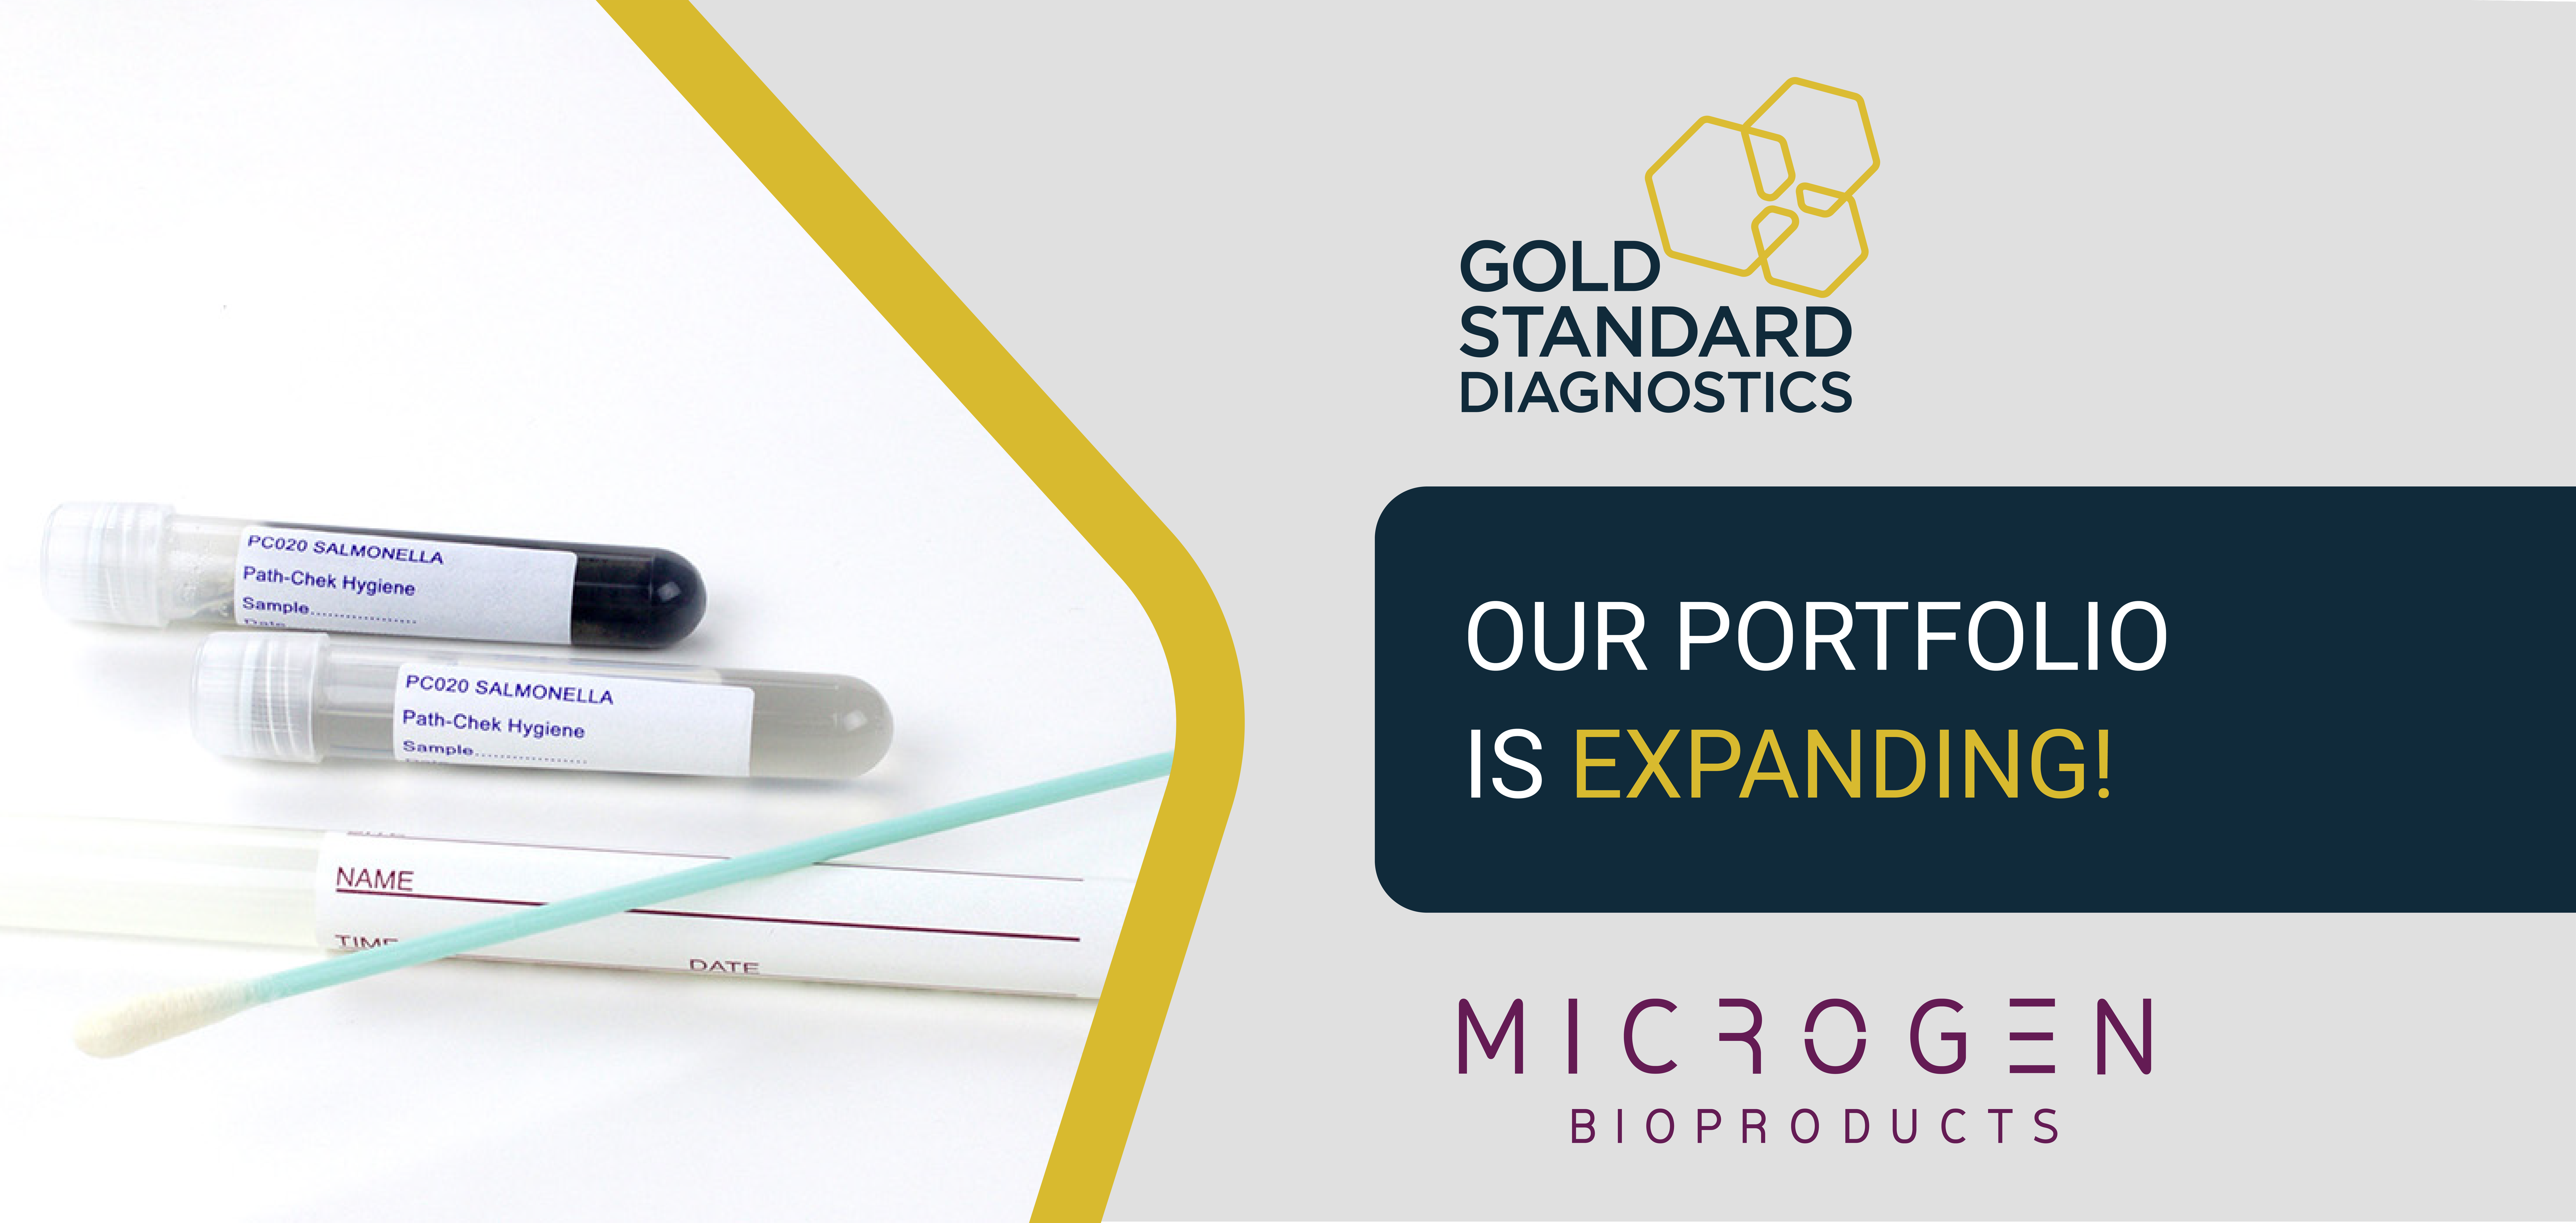 Gold Standard Diagnostics expands its global Food Safety solutions portfolio!